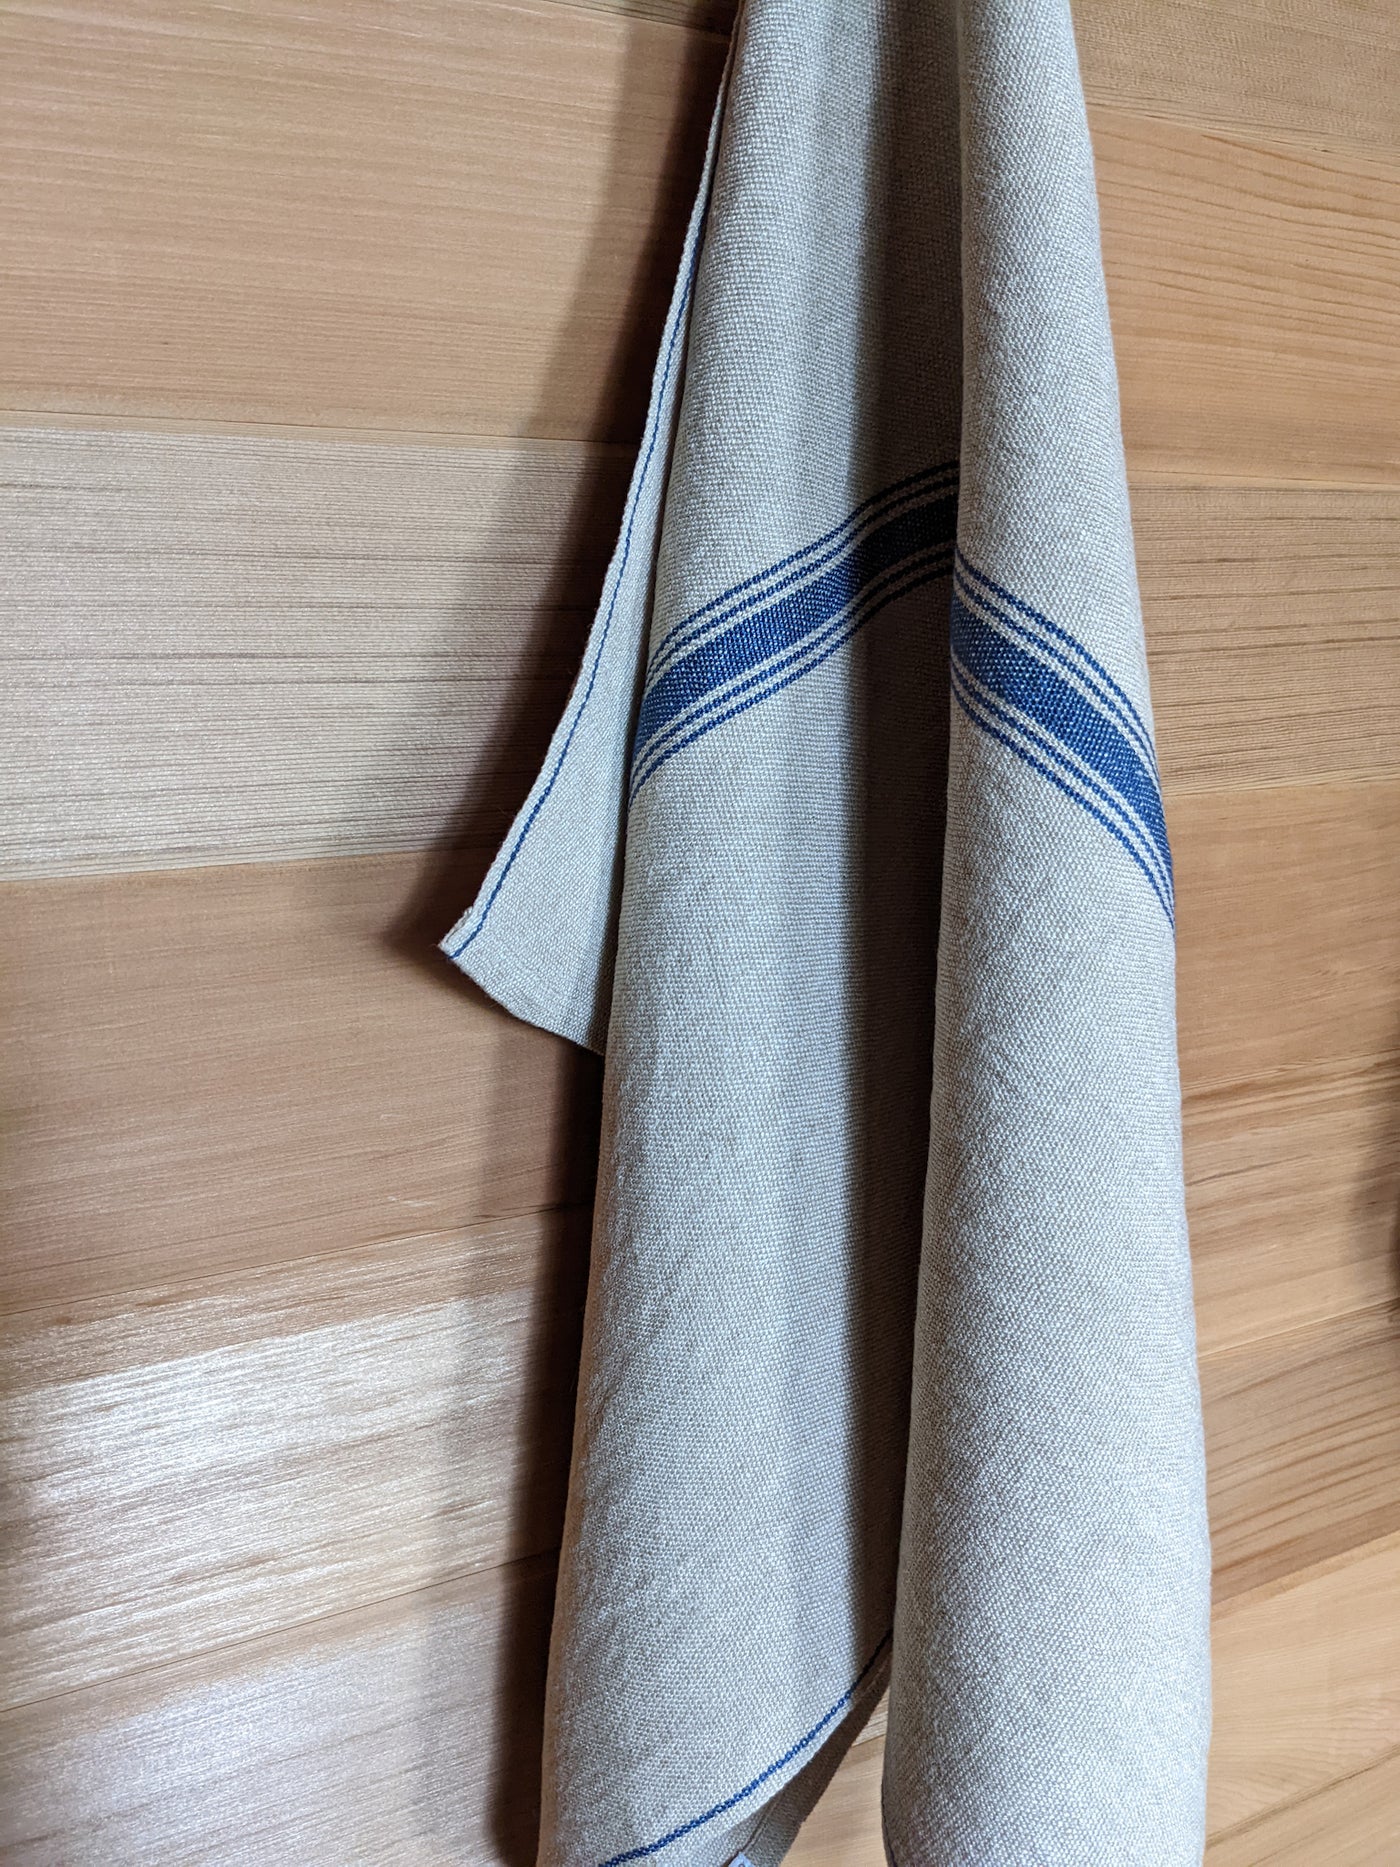 OLD WORLD Large Linen Towel